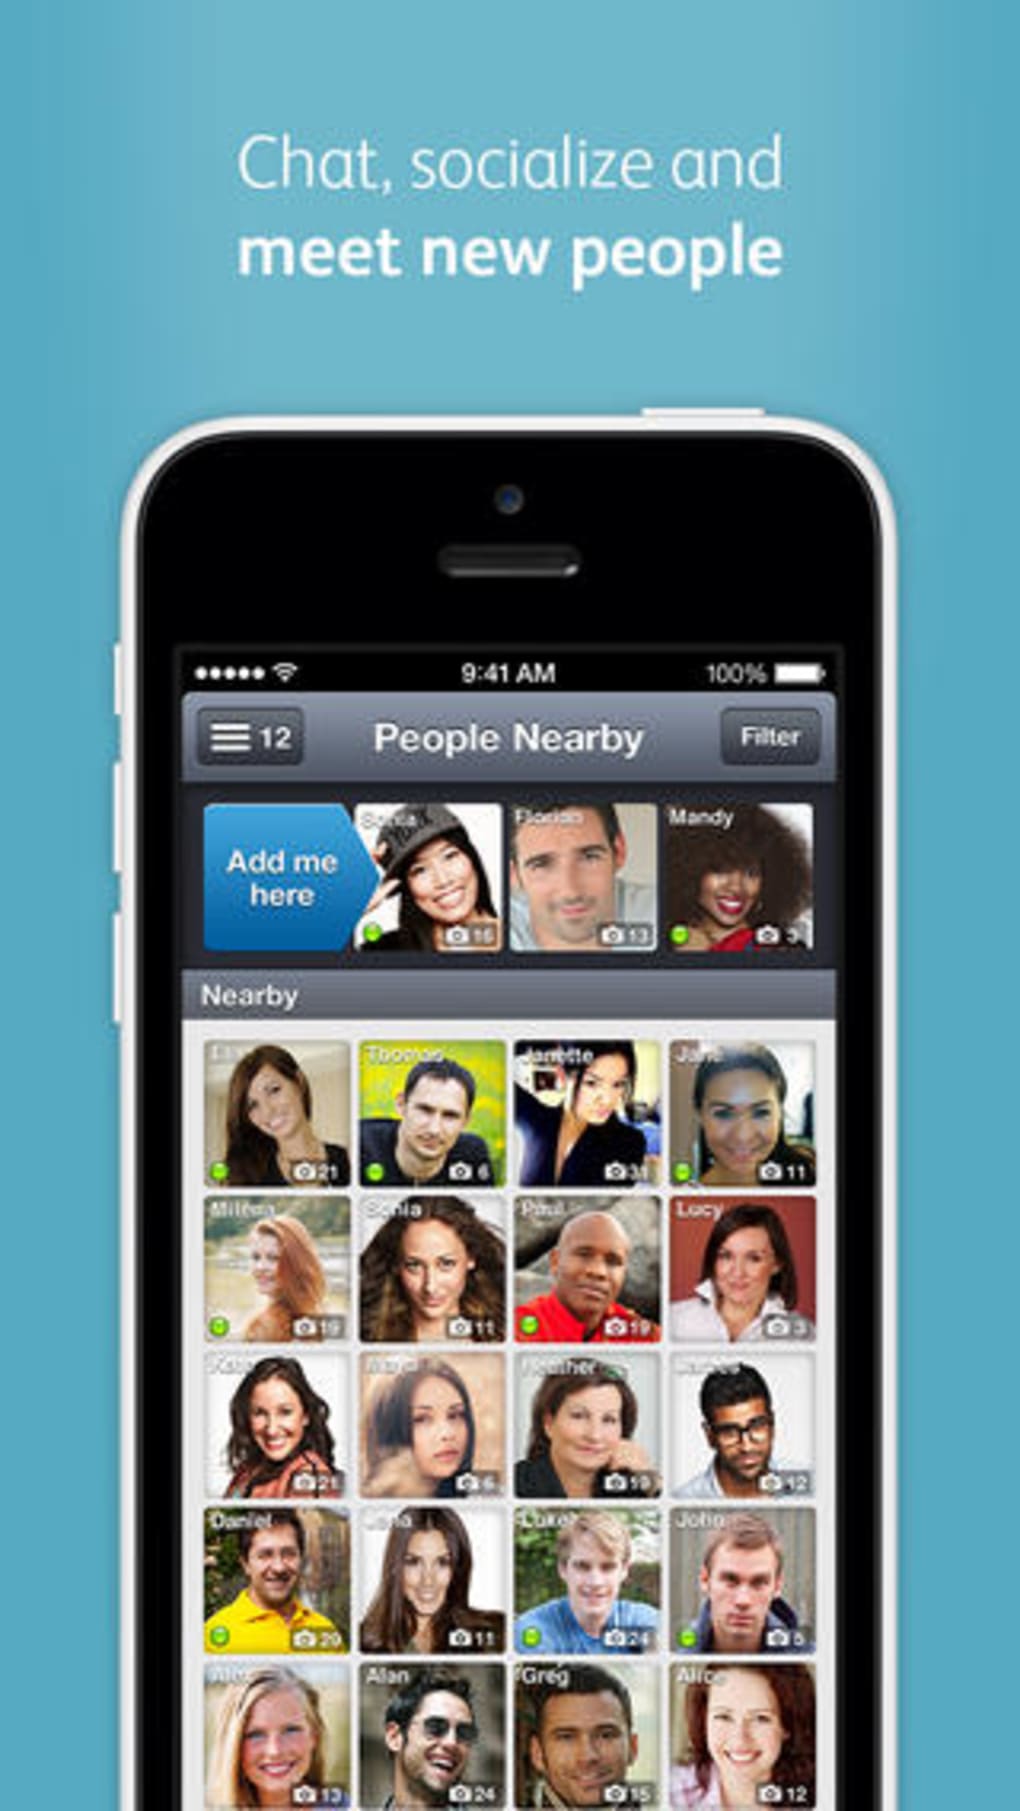 Yoomee - flirt dating-chat-app